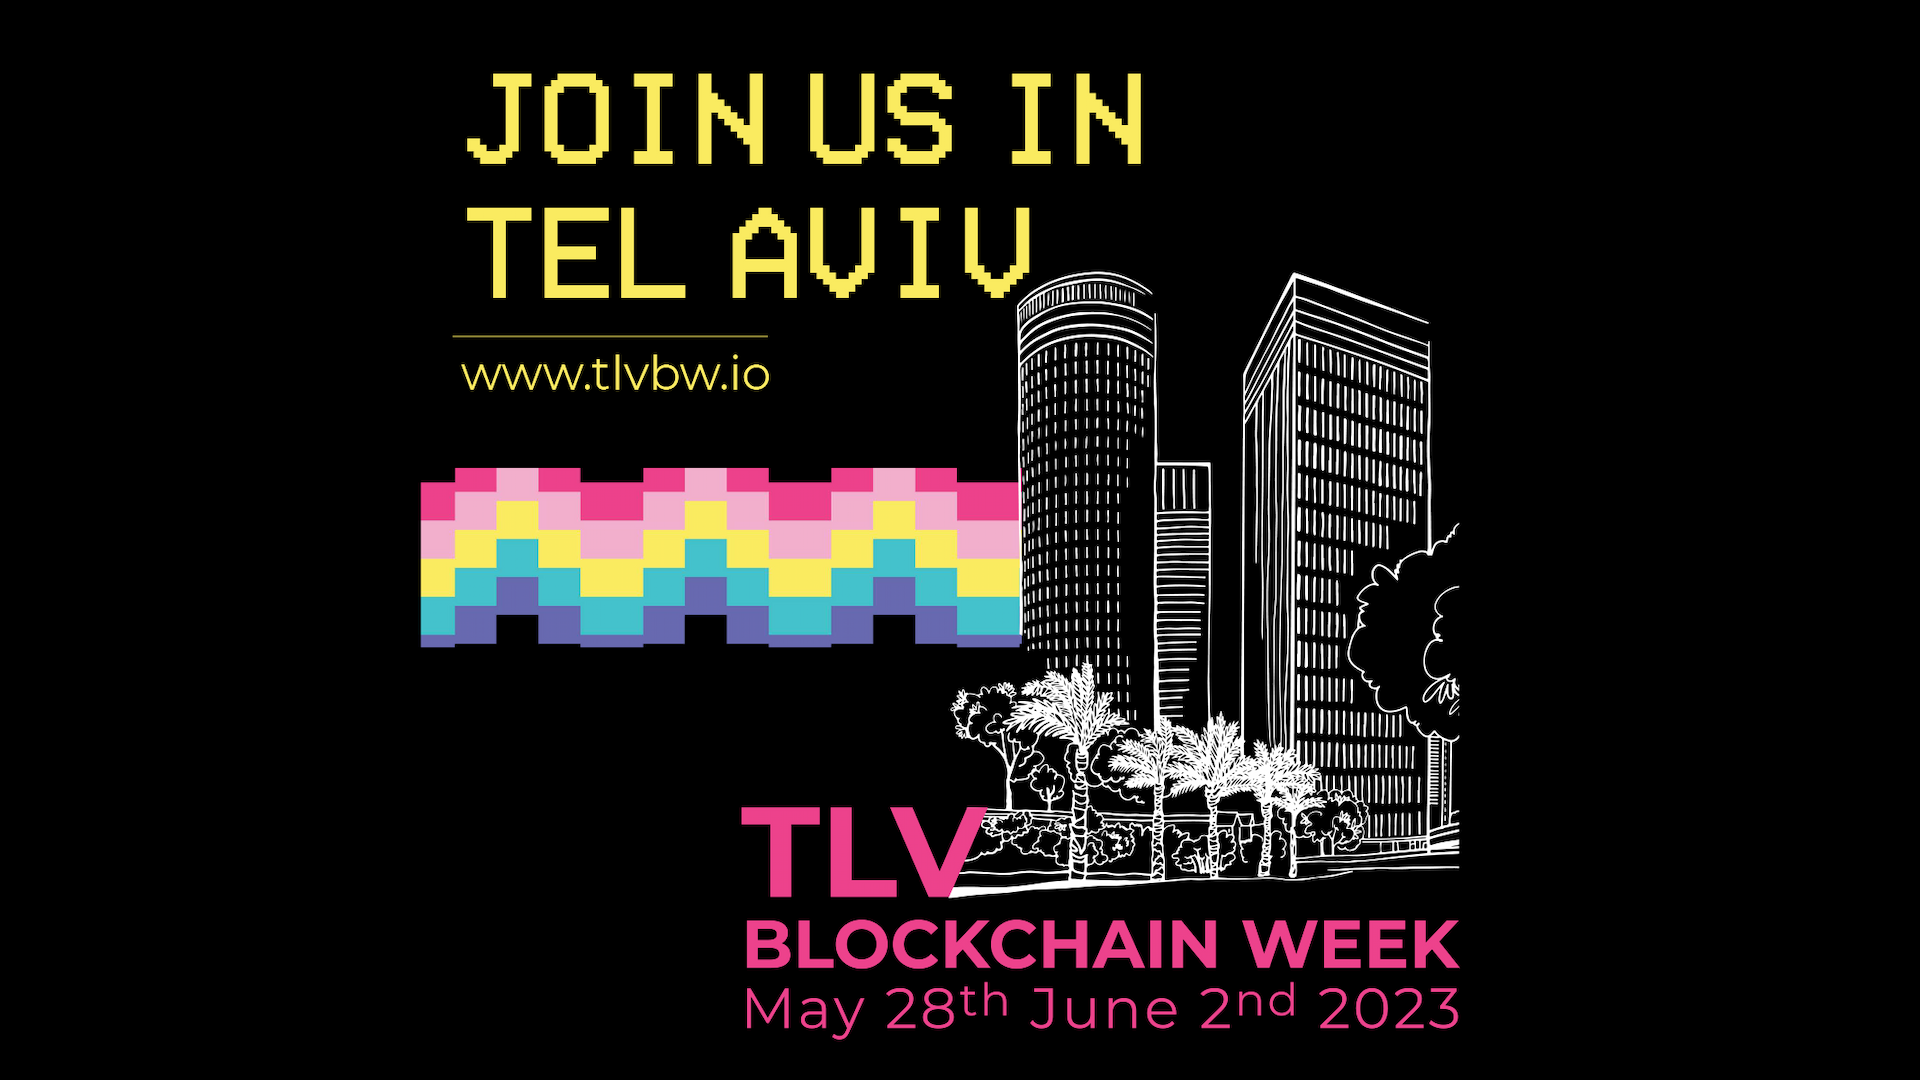 TLV WEB3.0 Blockchain week